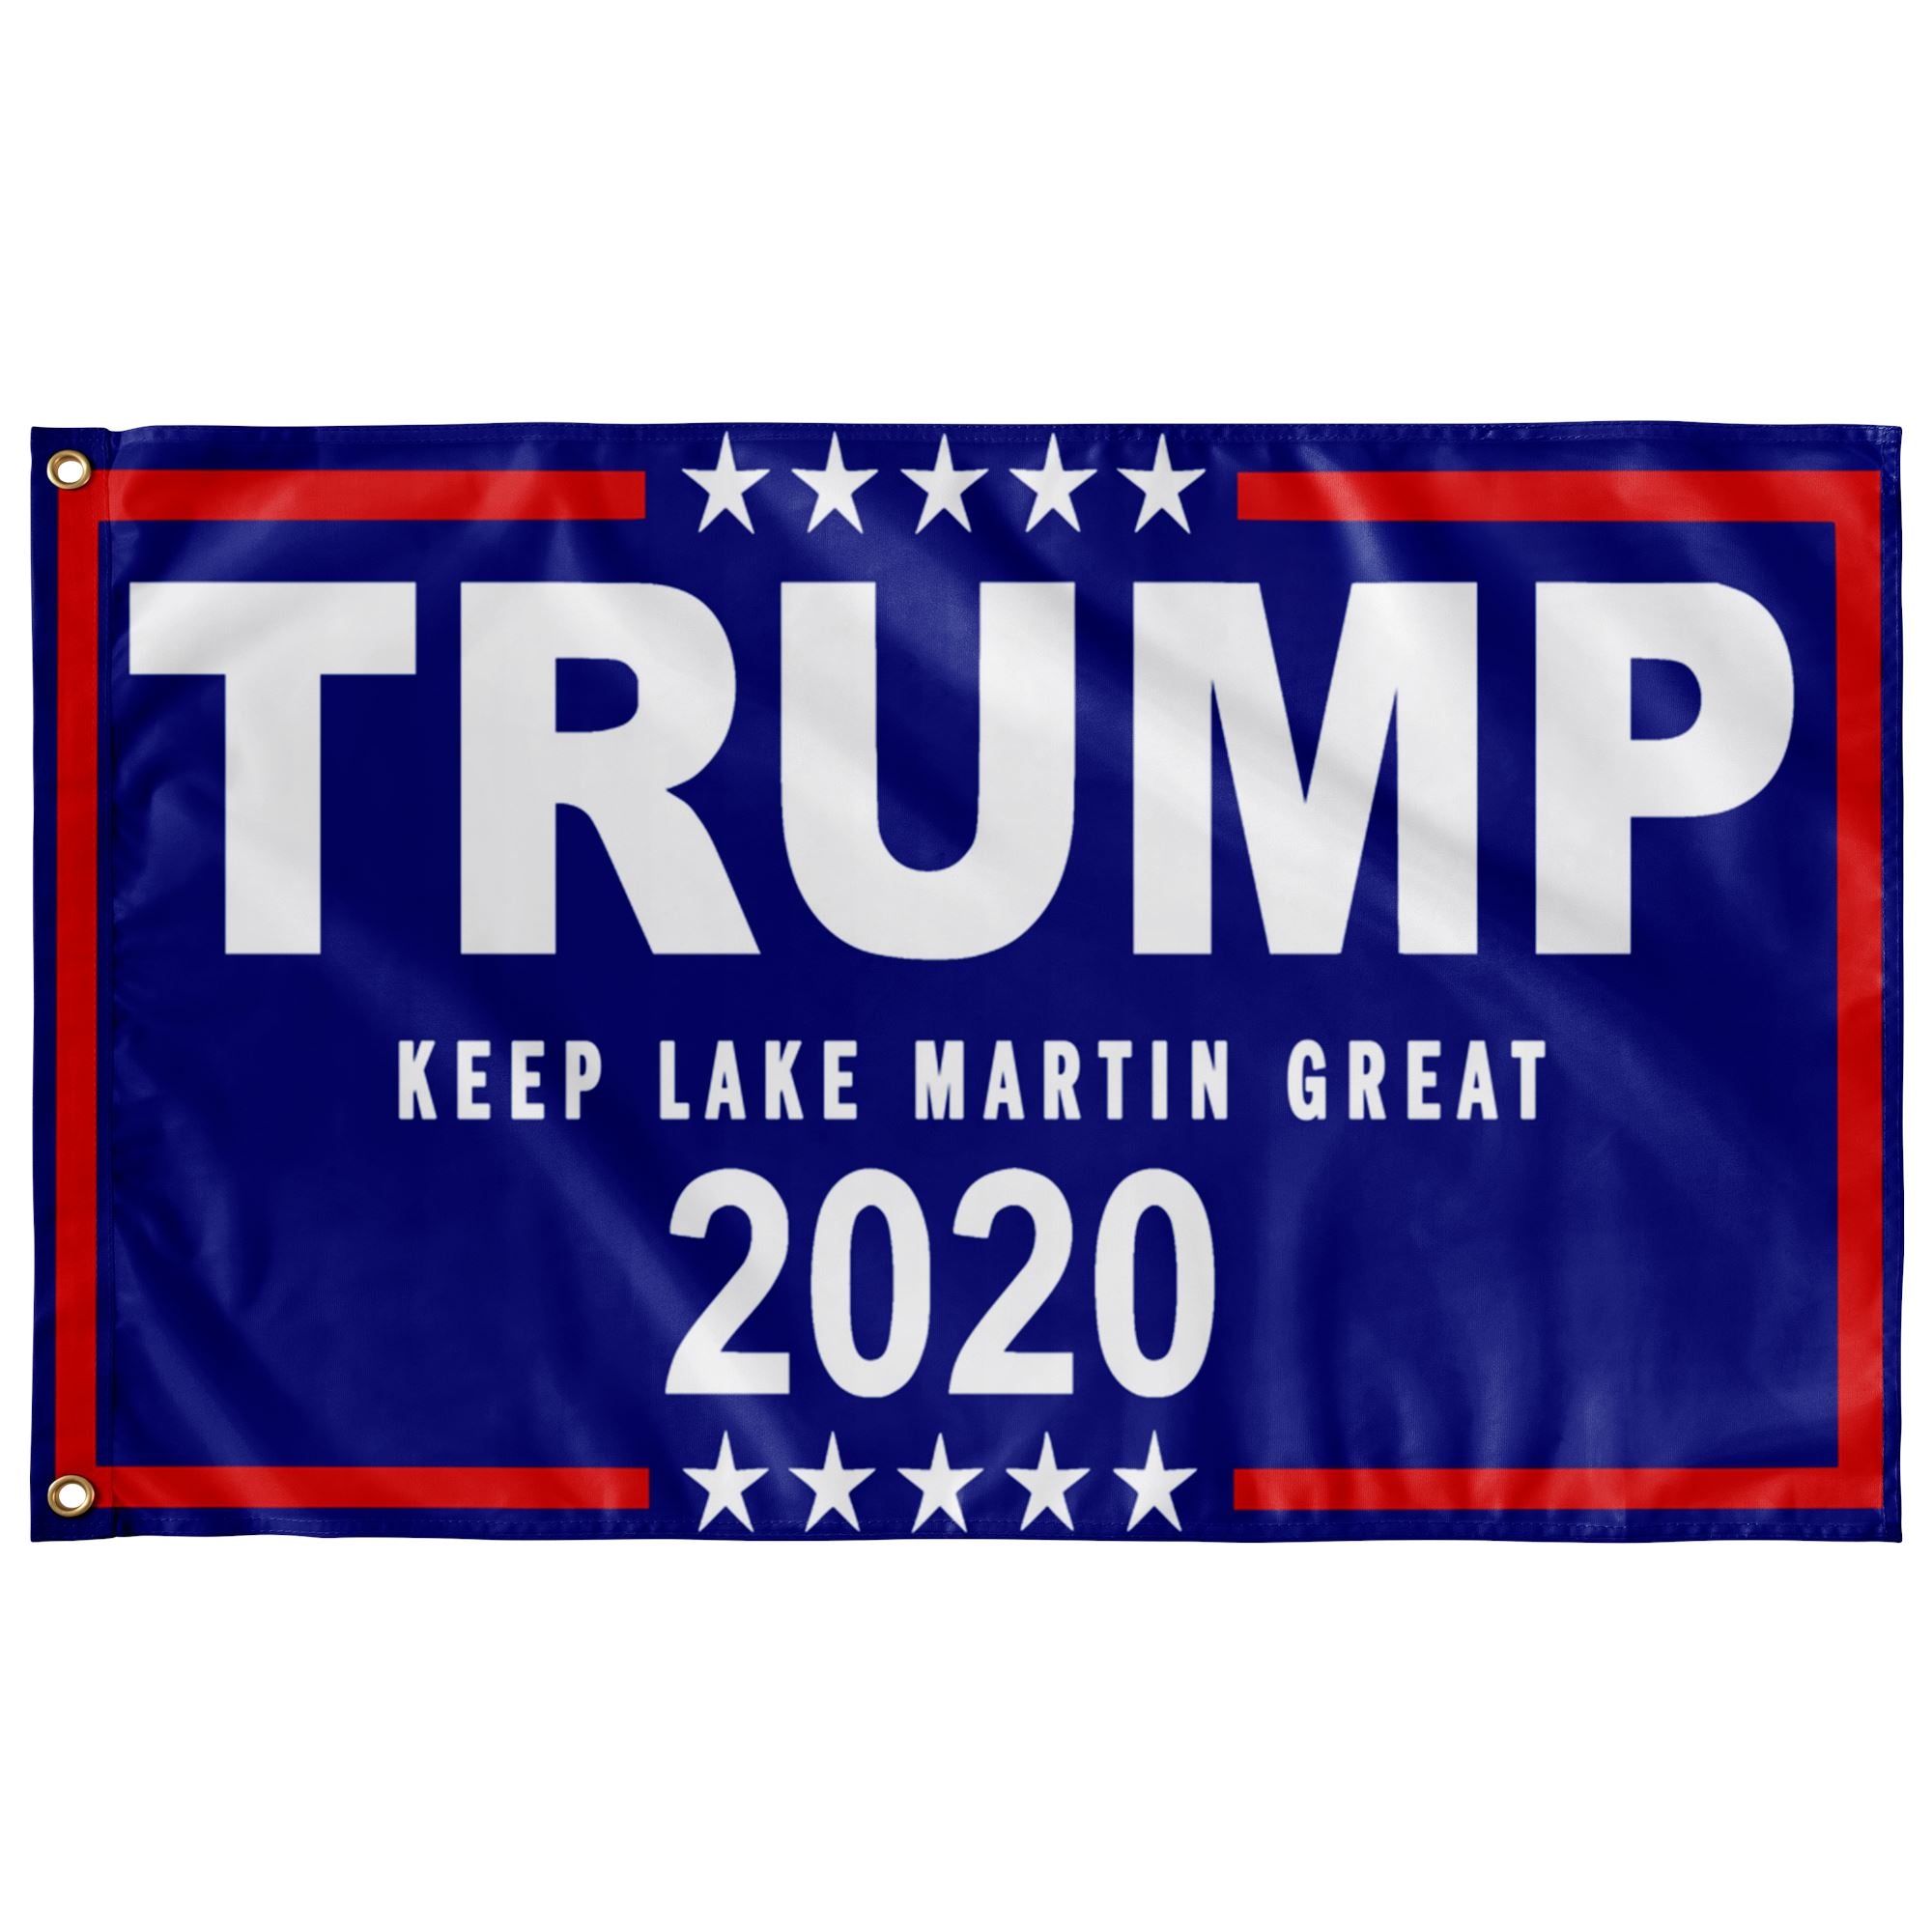 Trump Boat Flag - Keep Lake Martin Great - Houseboat Kings